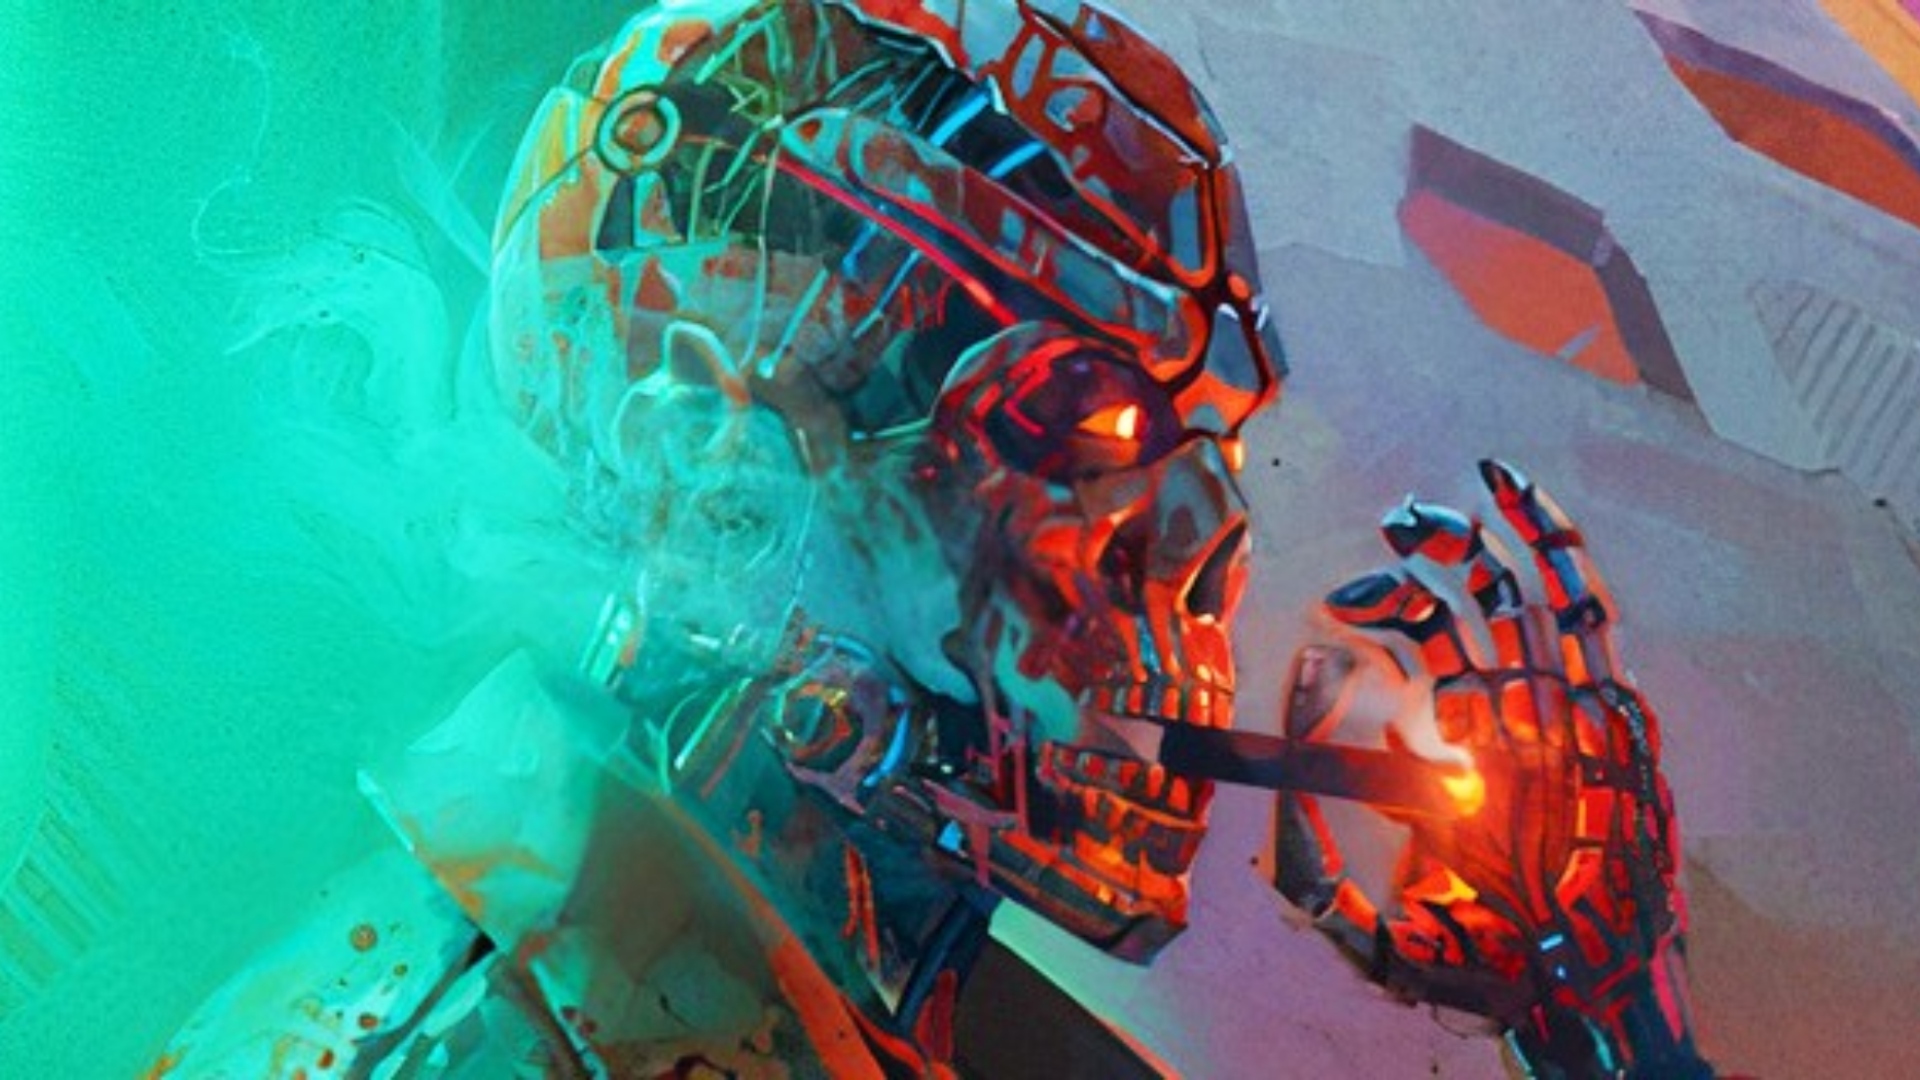 Doom Eternal meets Cyberpunk in stunning new FPS blowing up on Steam